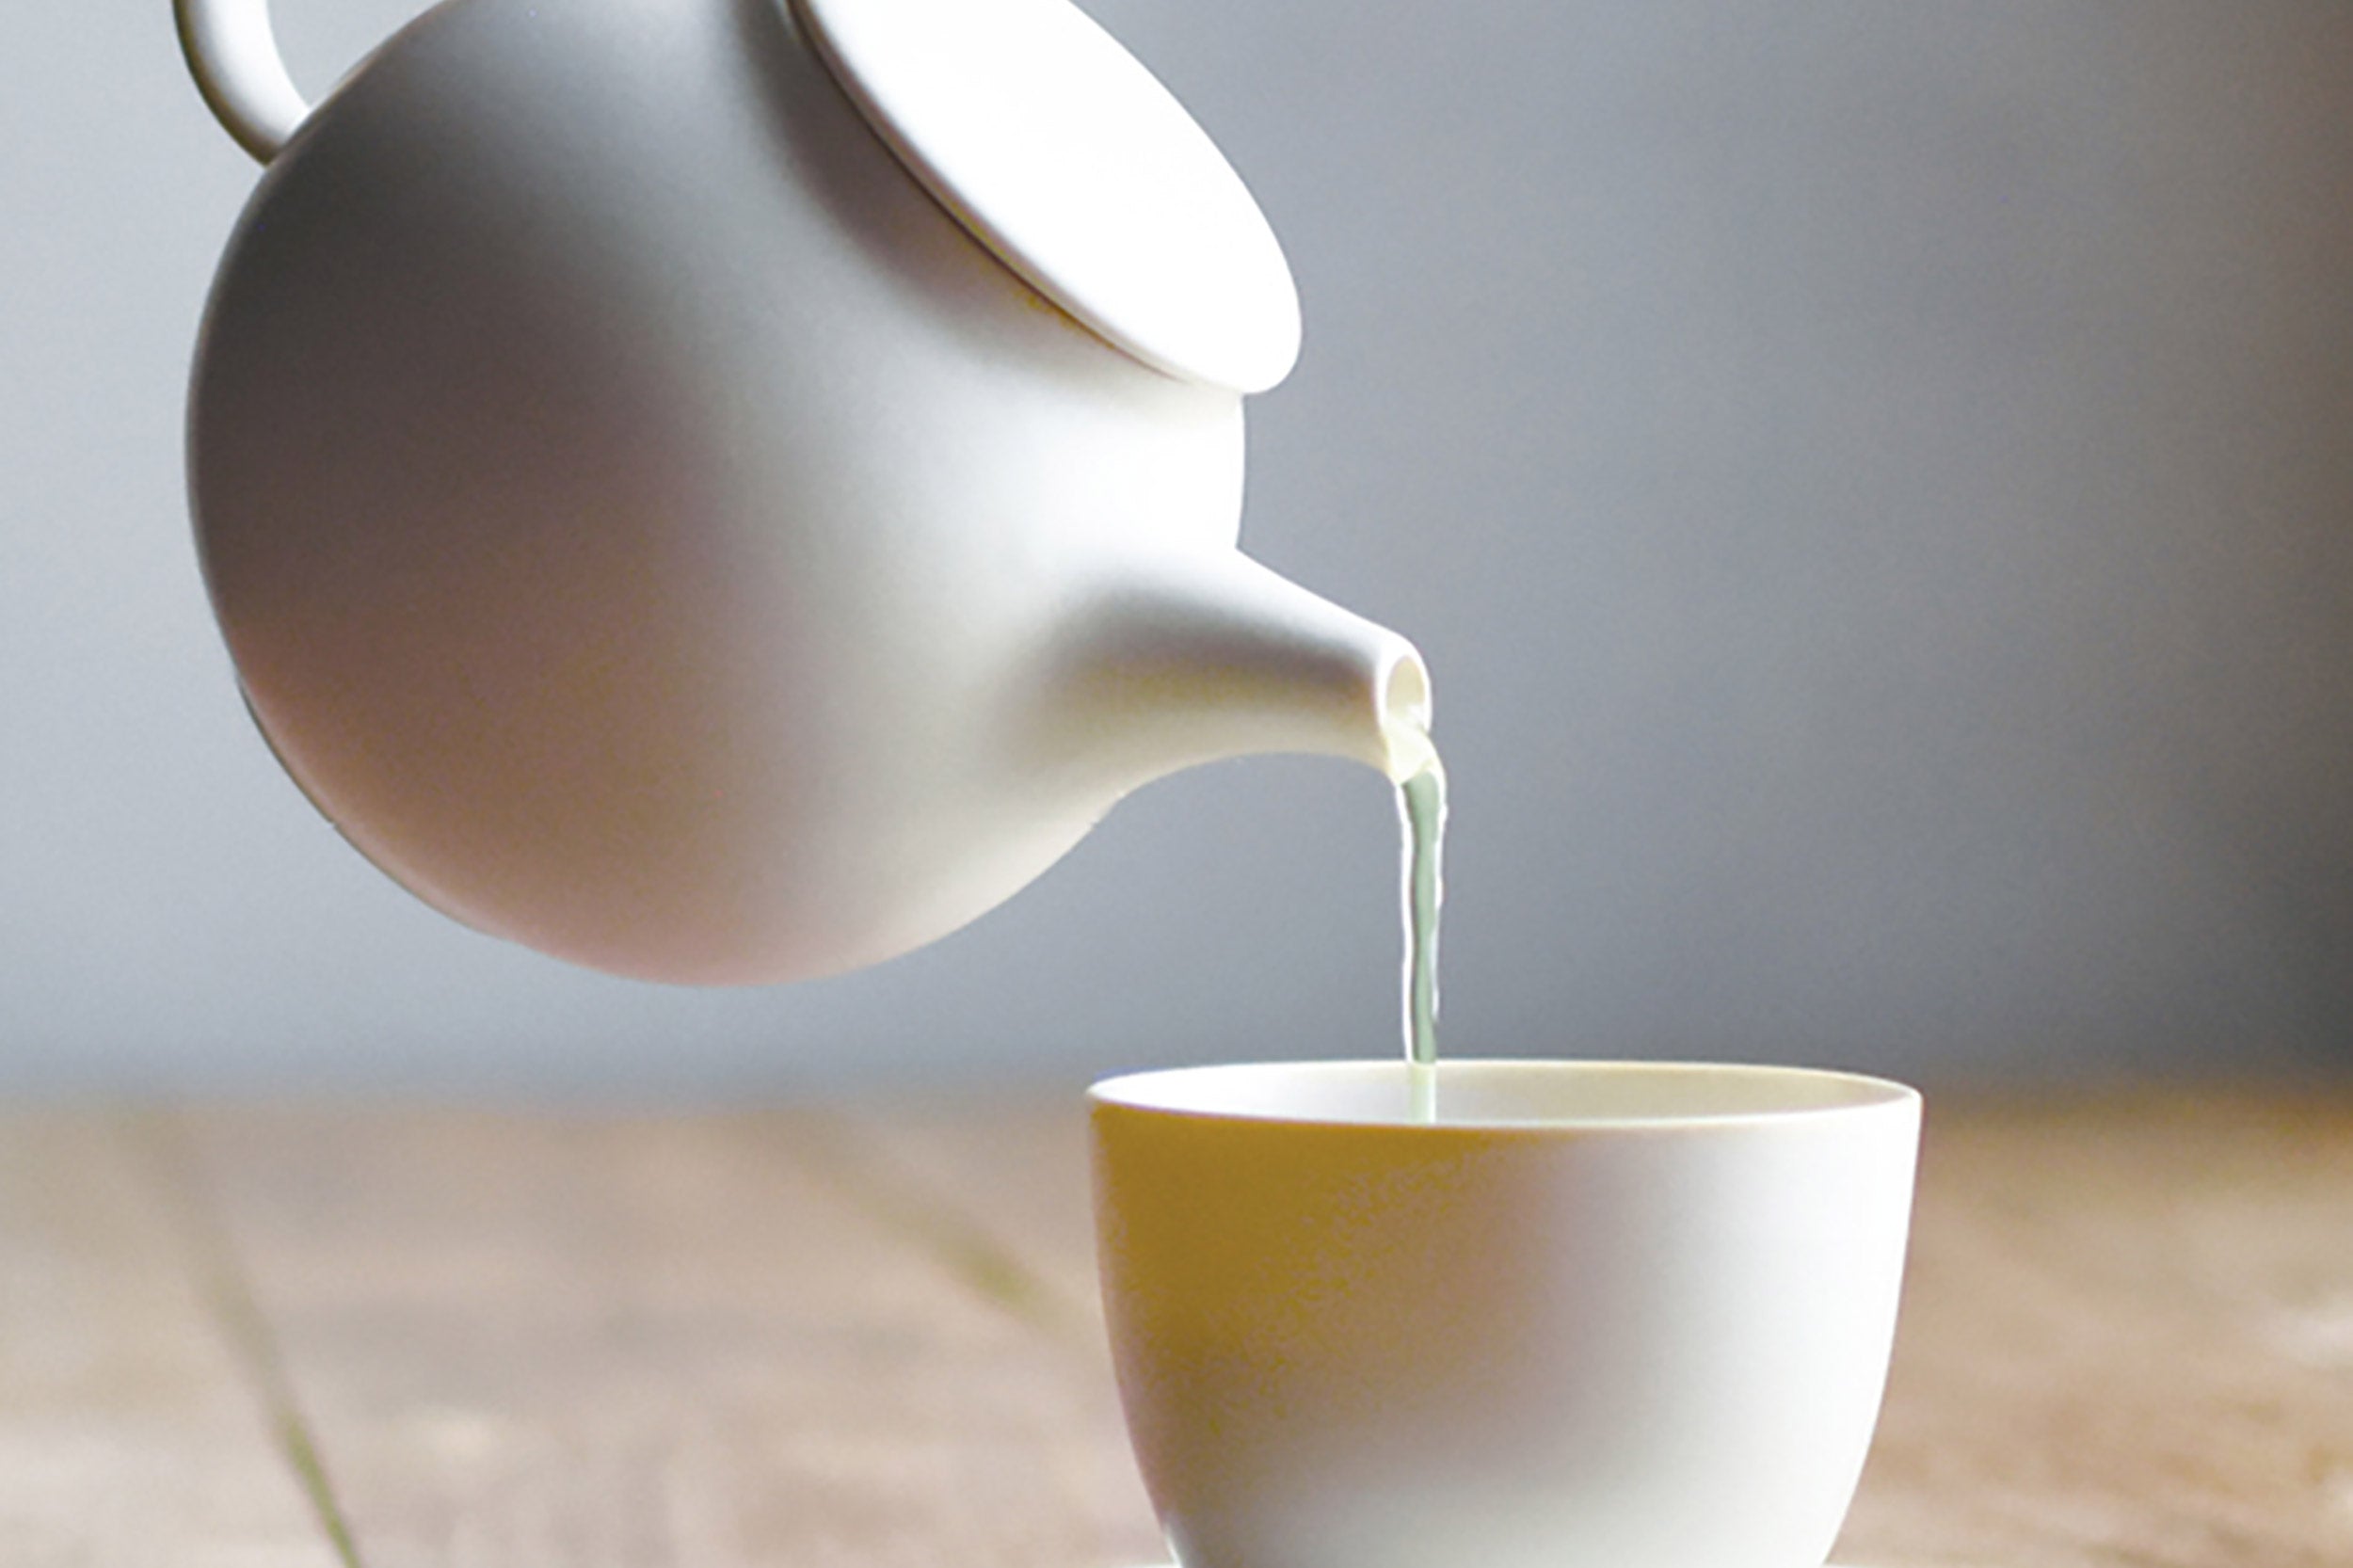 Kinto-Pebble Teapot